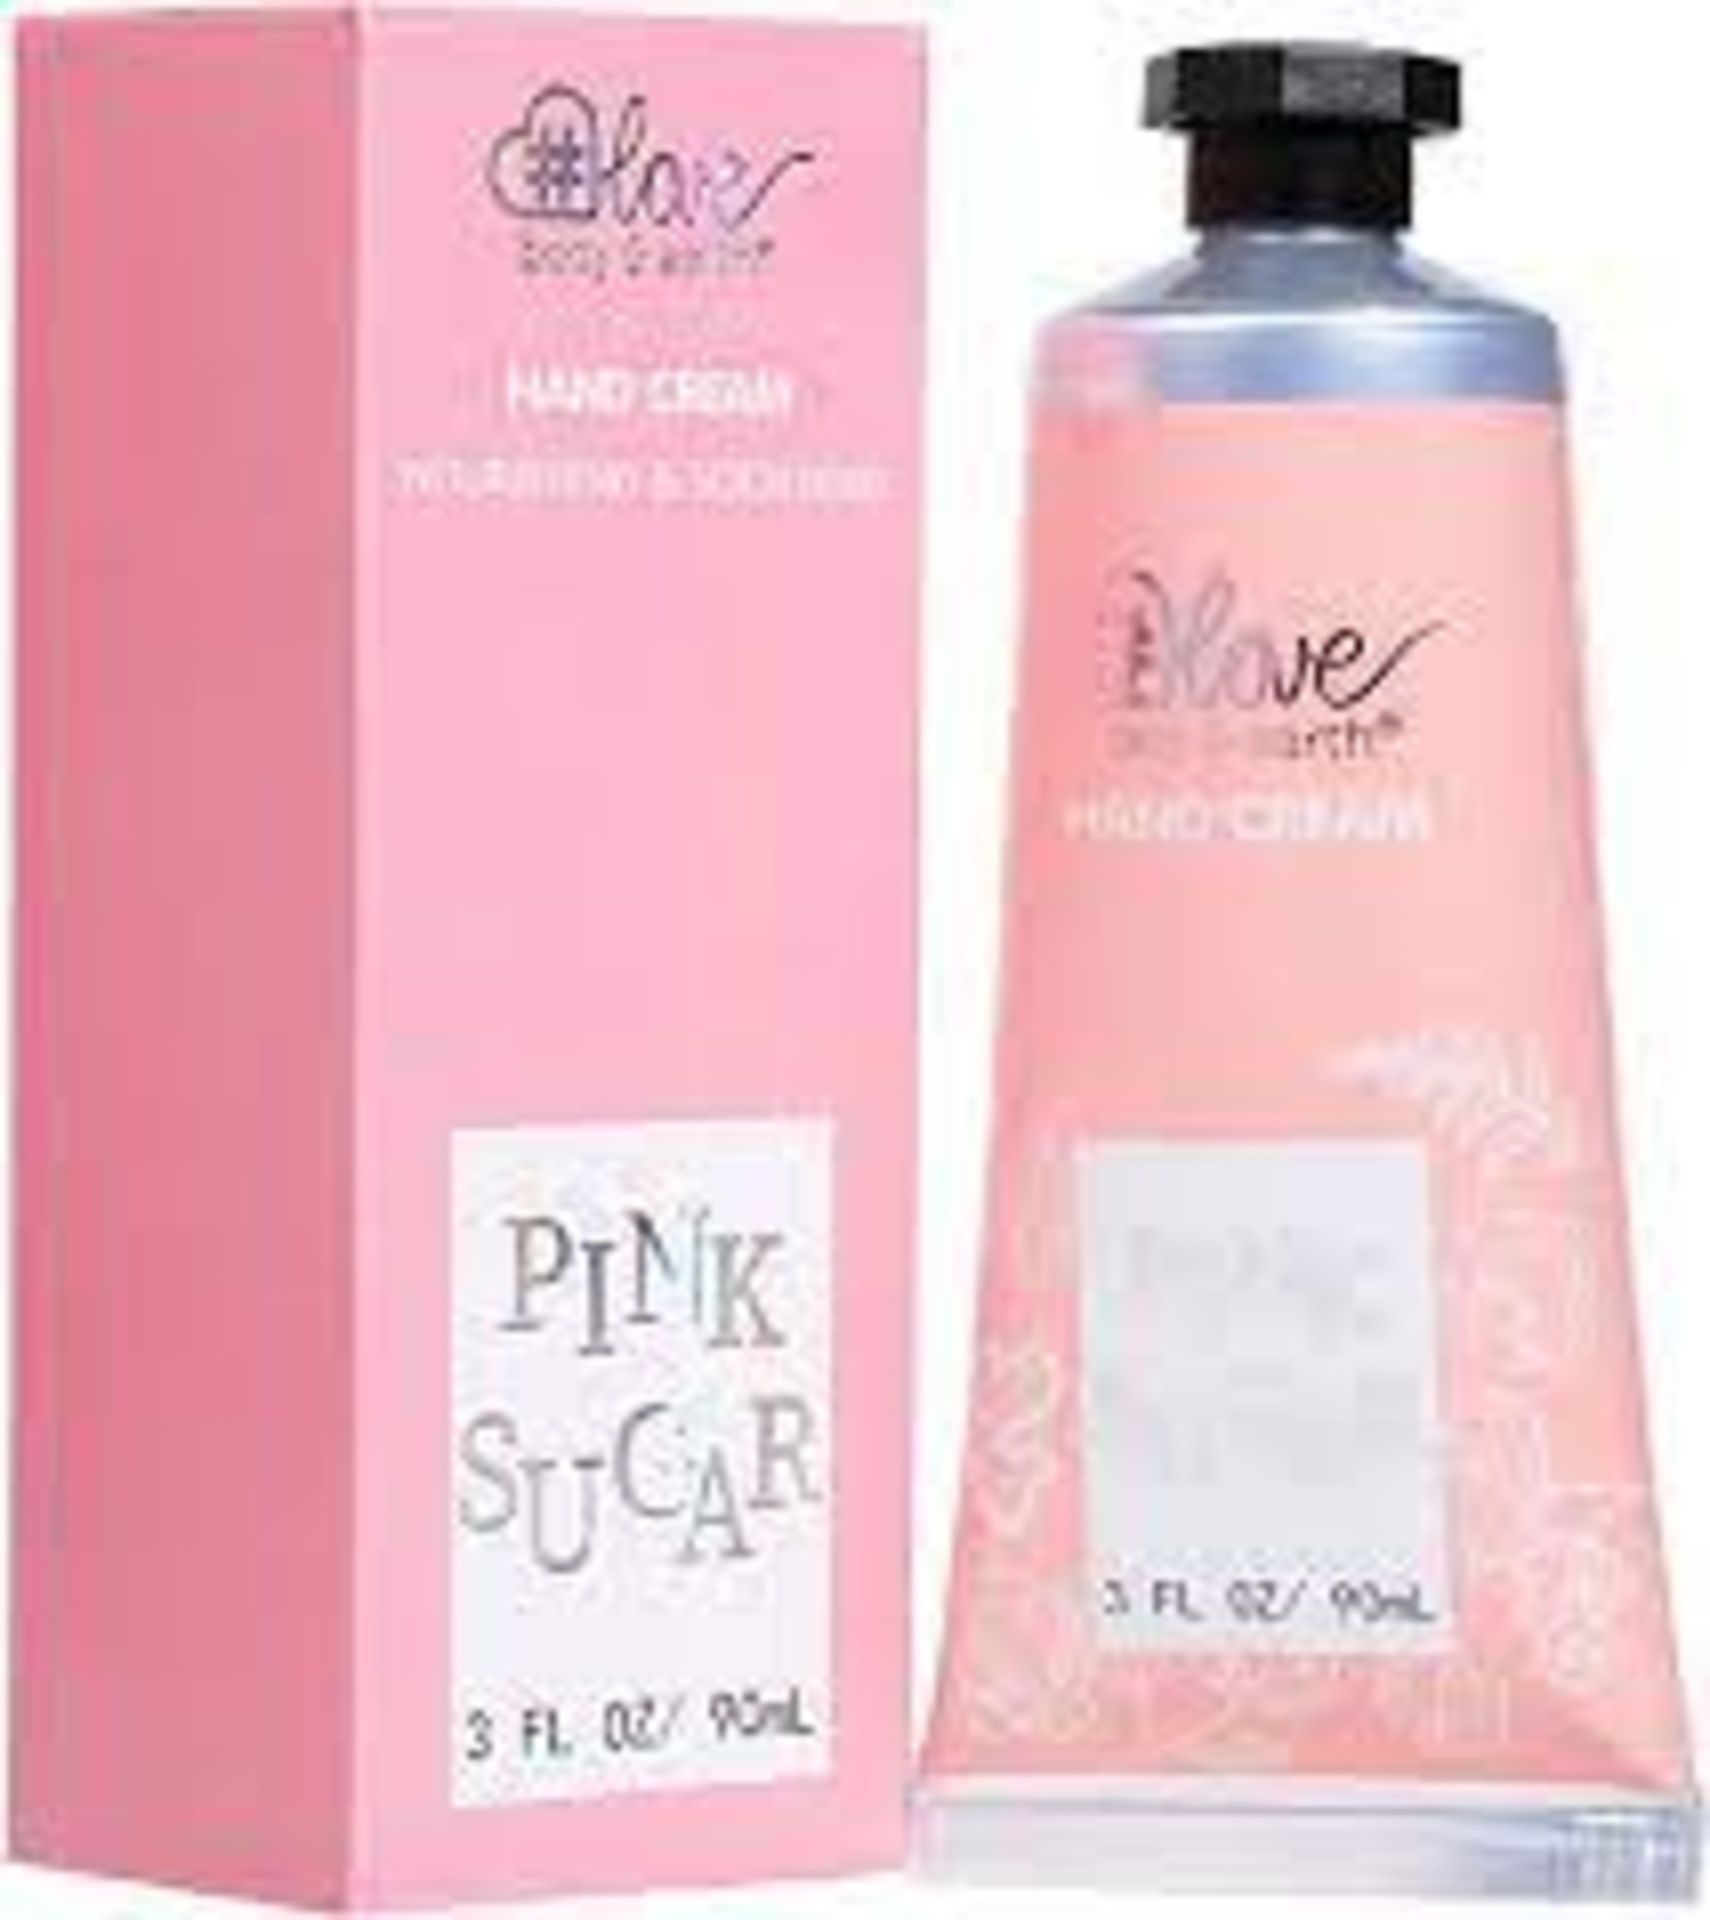 Pink Sugar 90ml Hand Cream